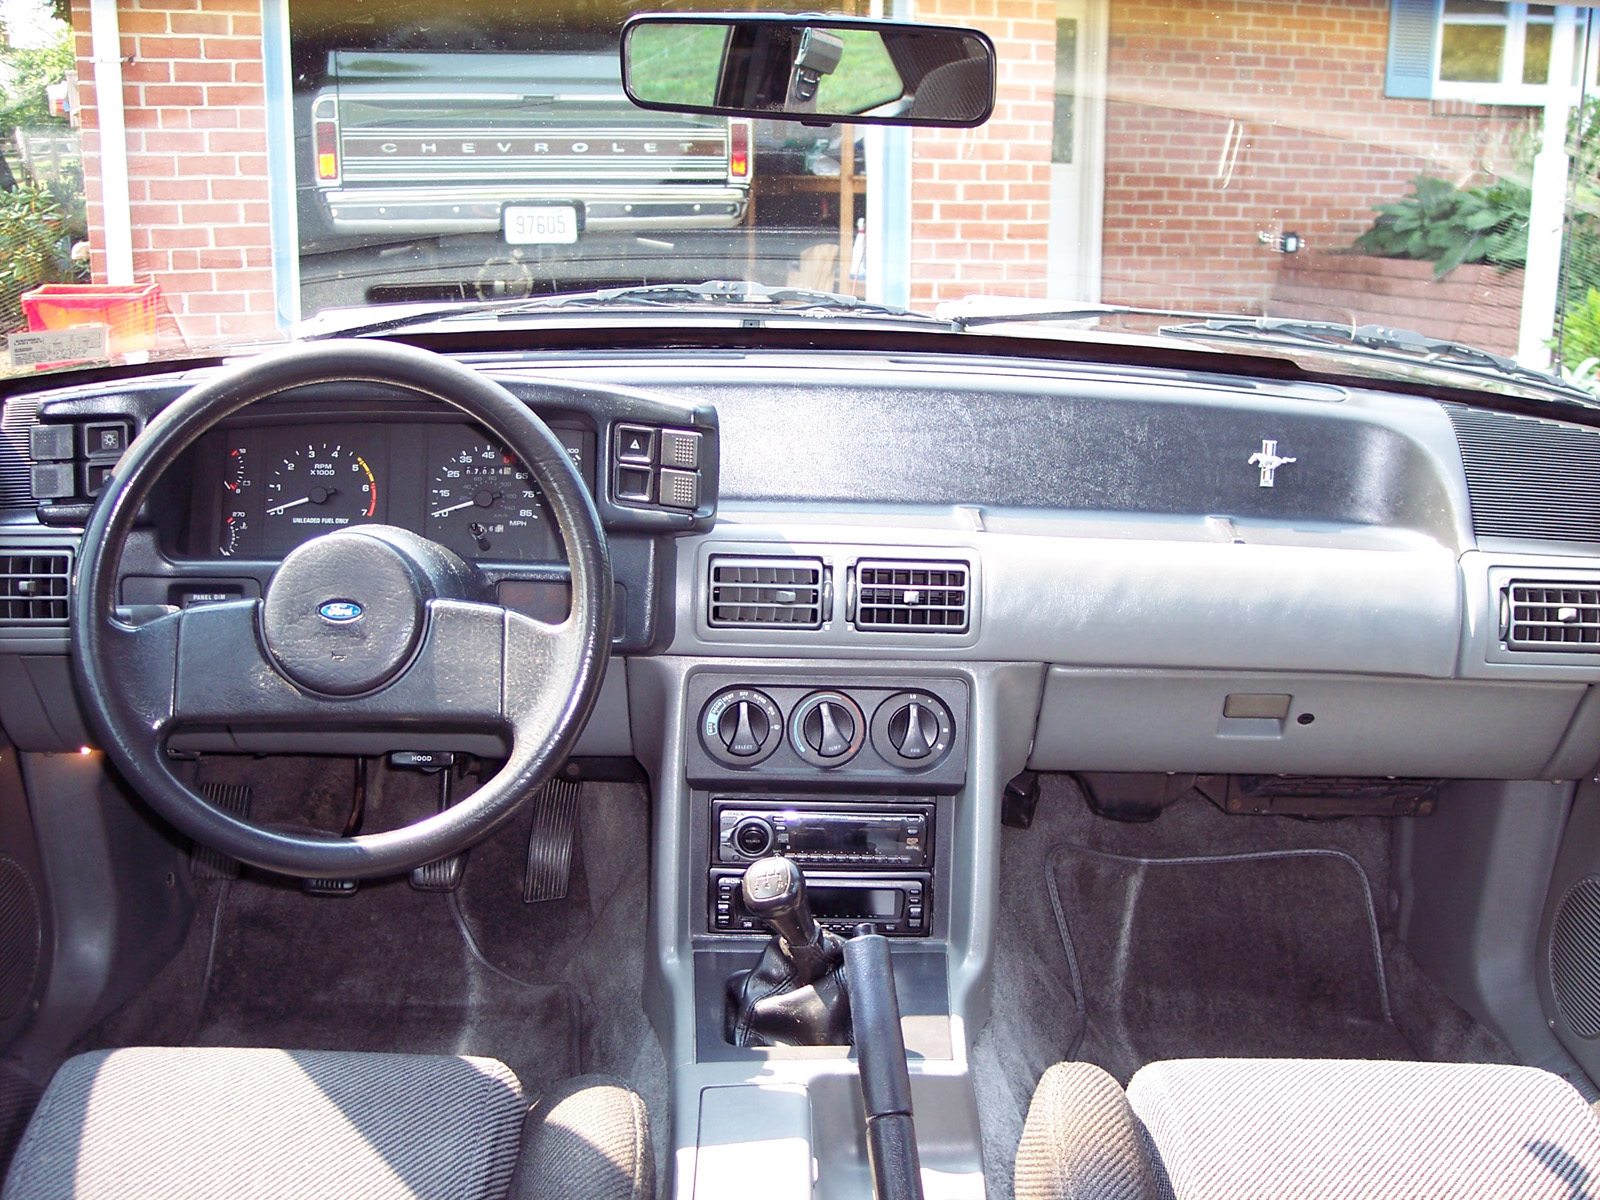 1988 Gt Interior Ford Mustang Photo Gallery Shnack Com